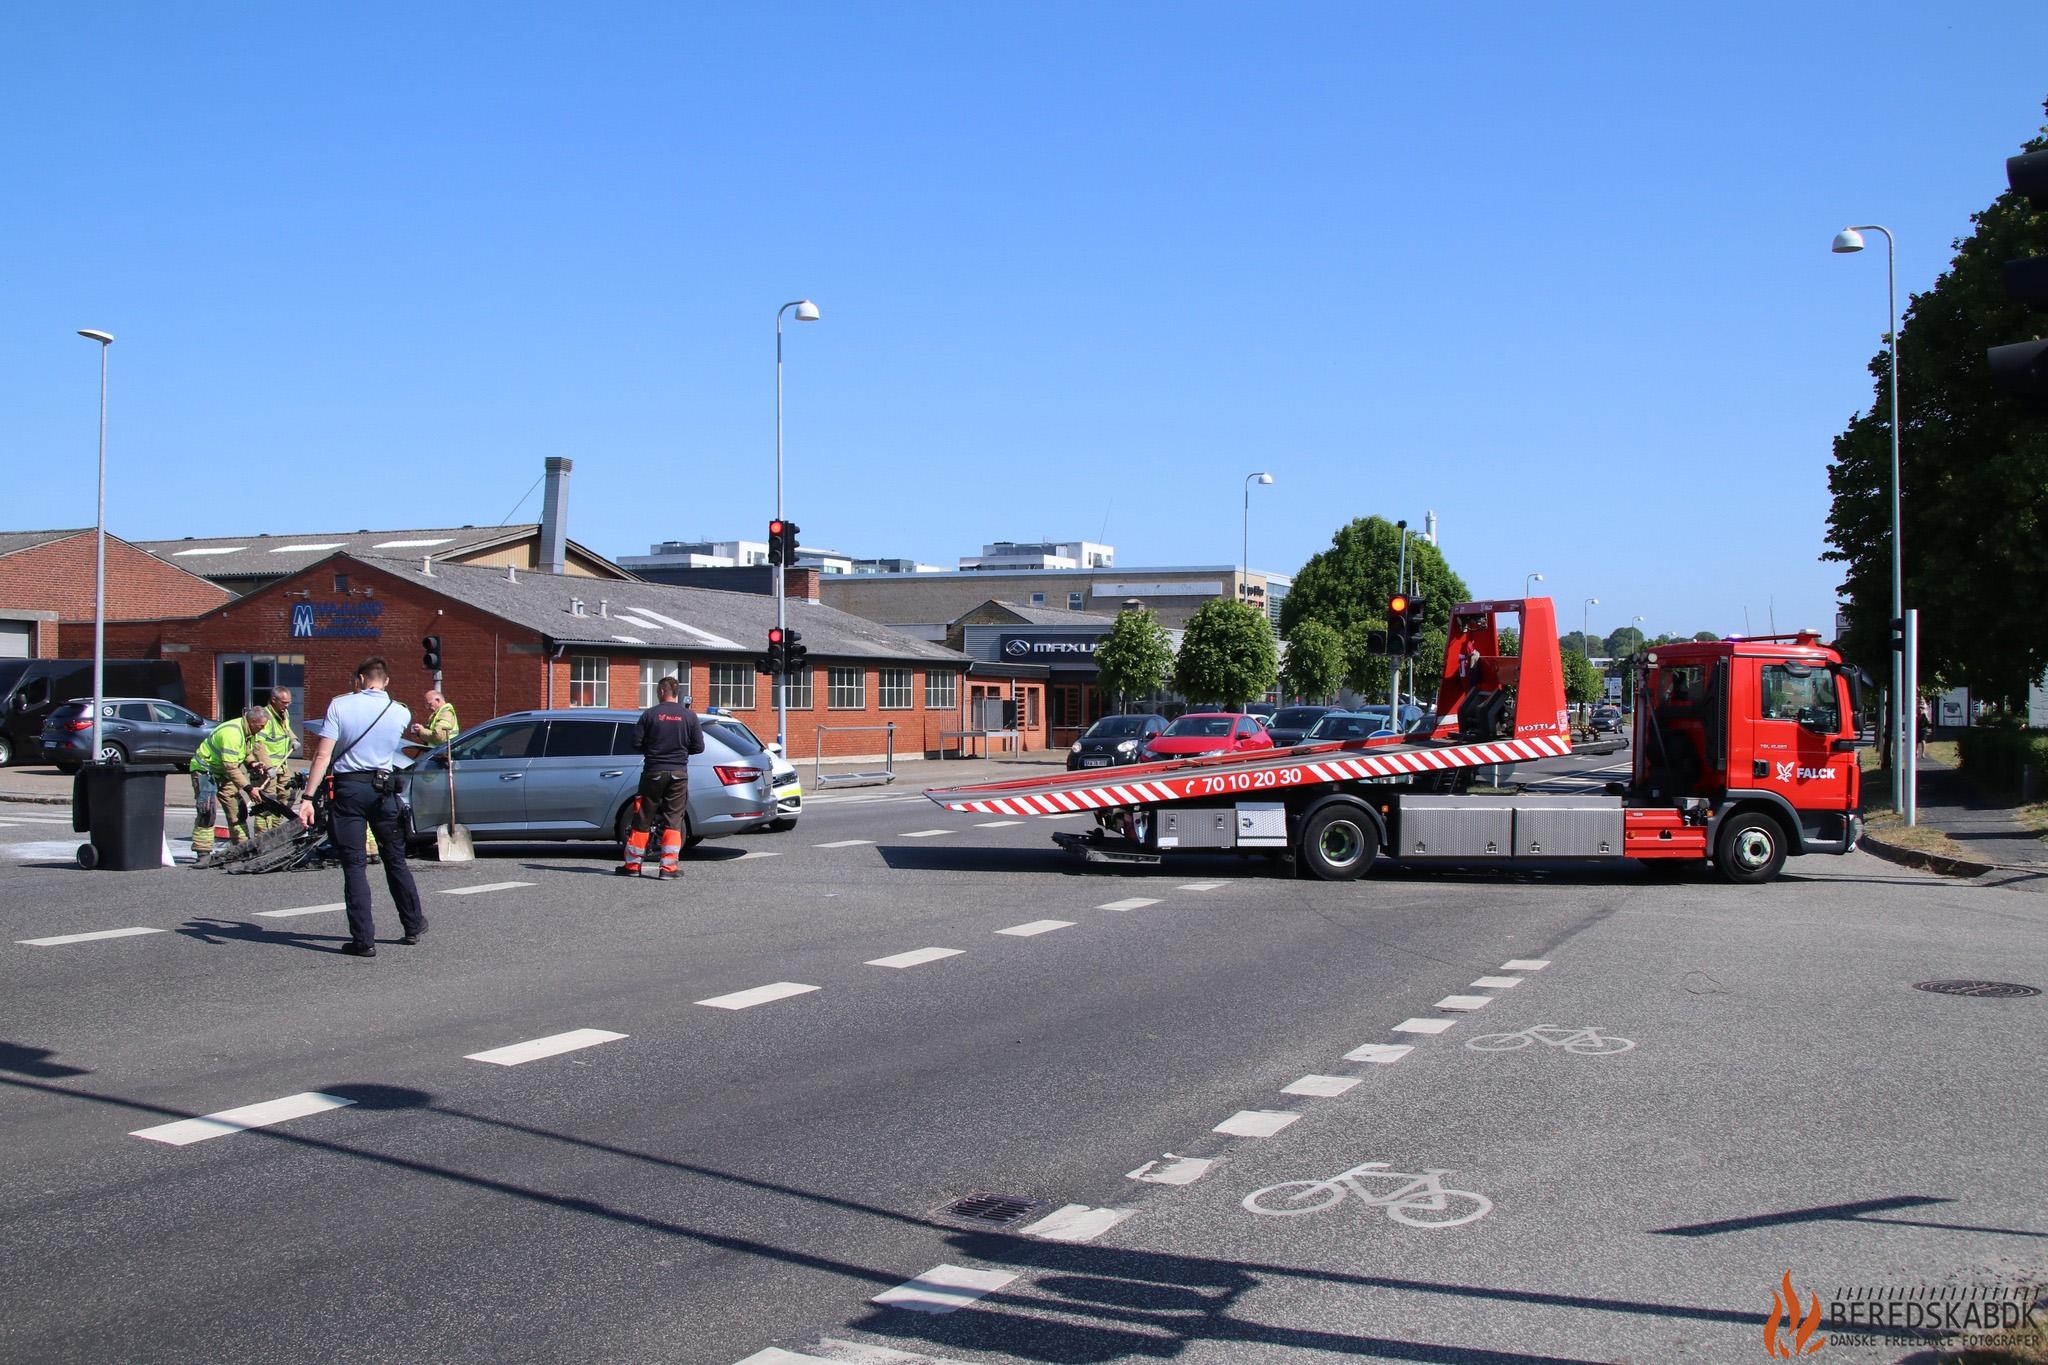 05/06-23 Uheld på Høegh Guldbergs Gade i Horsens